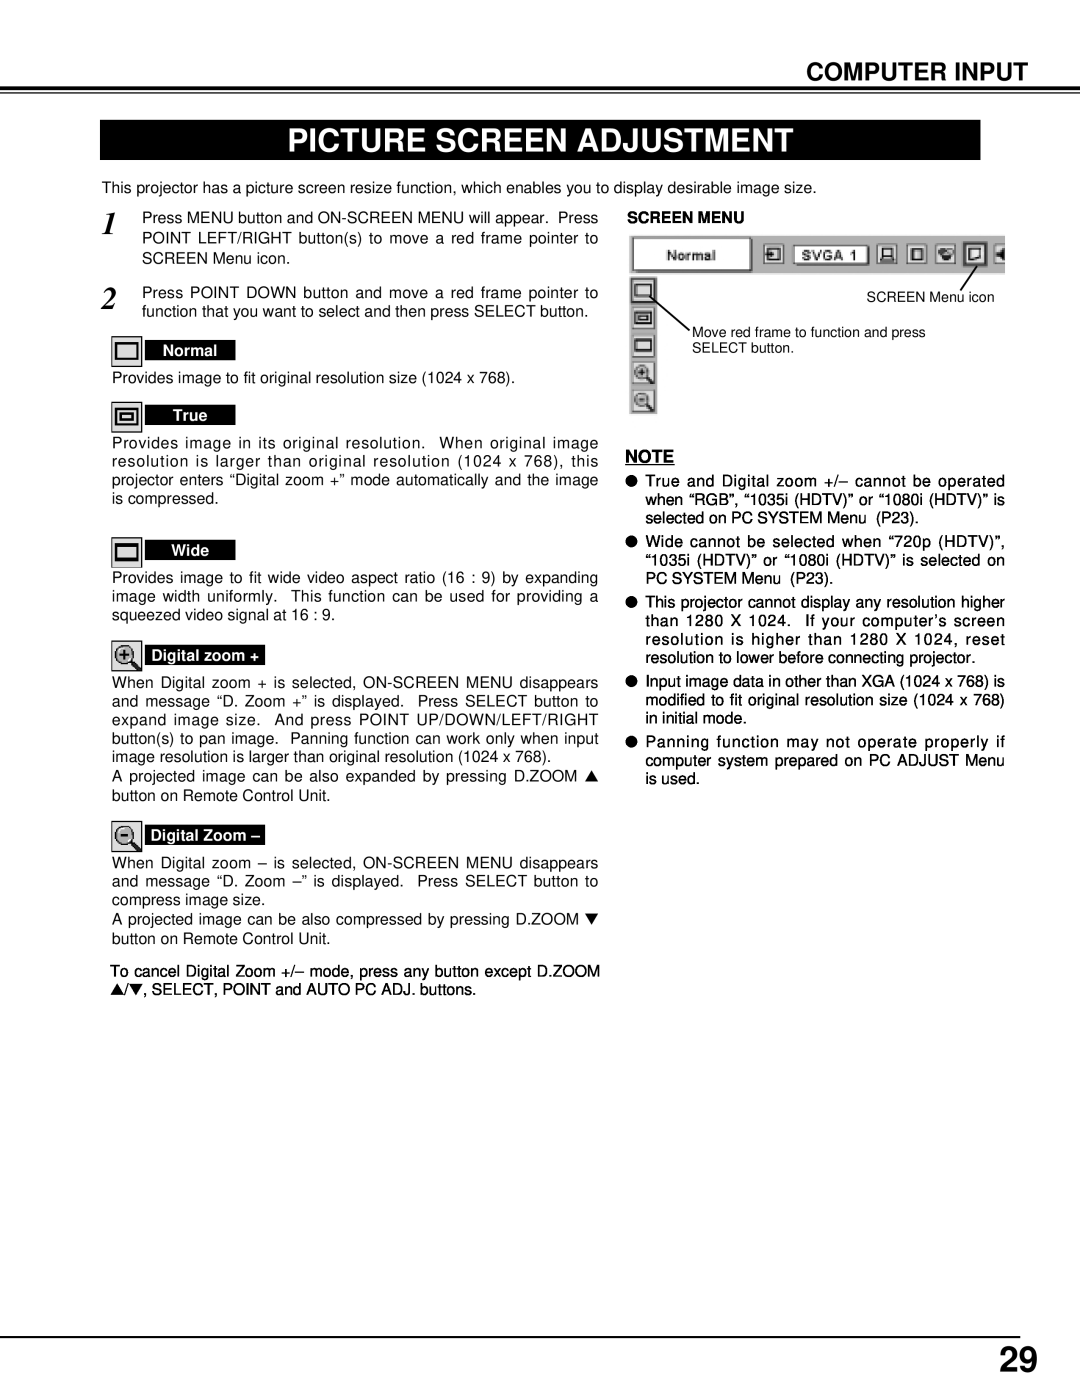 Eiki LC-X1000 instruction manual Picture Screen Adjustment, Screen Menu 